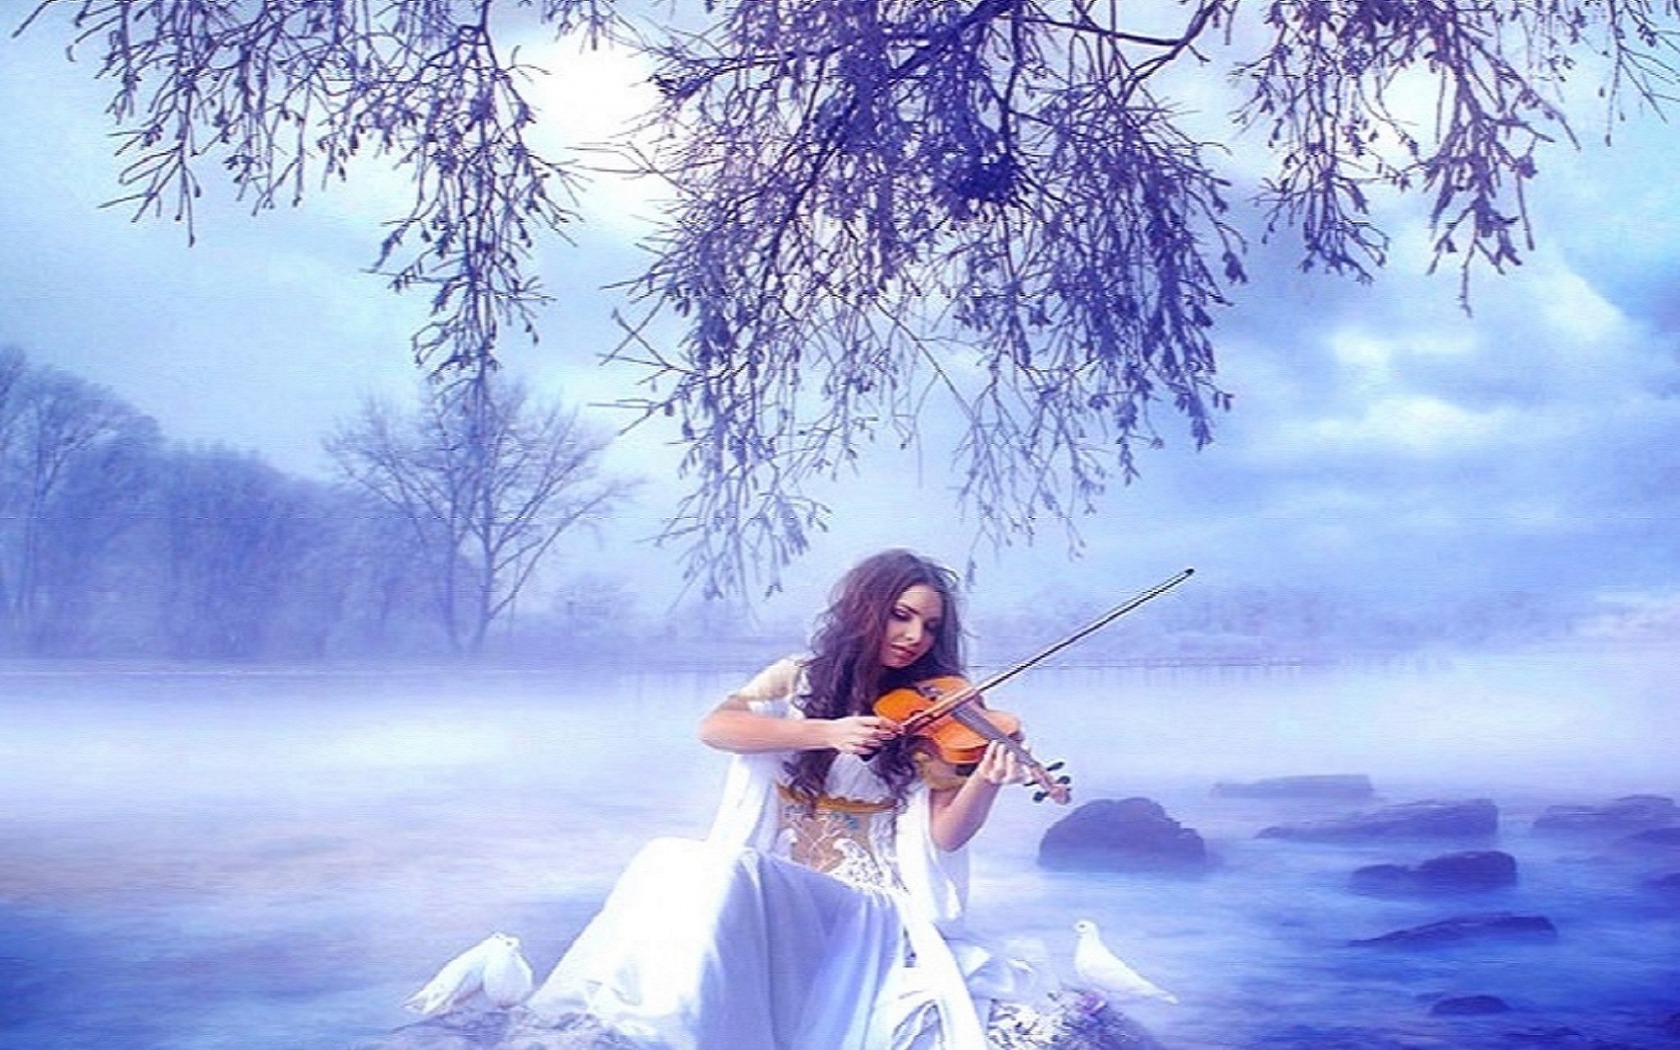 Мир души слушать. Девушки со скрипкой. Фотосессия со скрипкой. Фотосессия со скрипкой на природе. Скрипка на снегу.